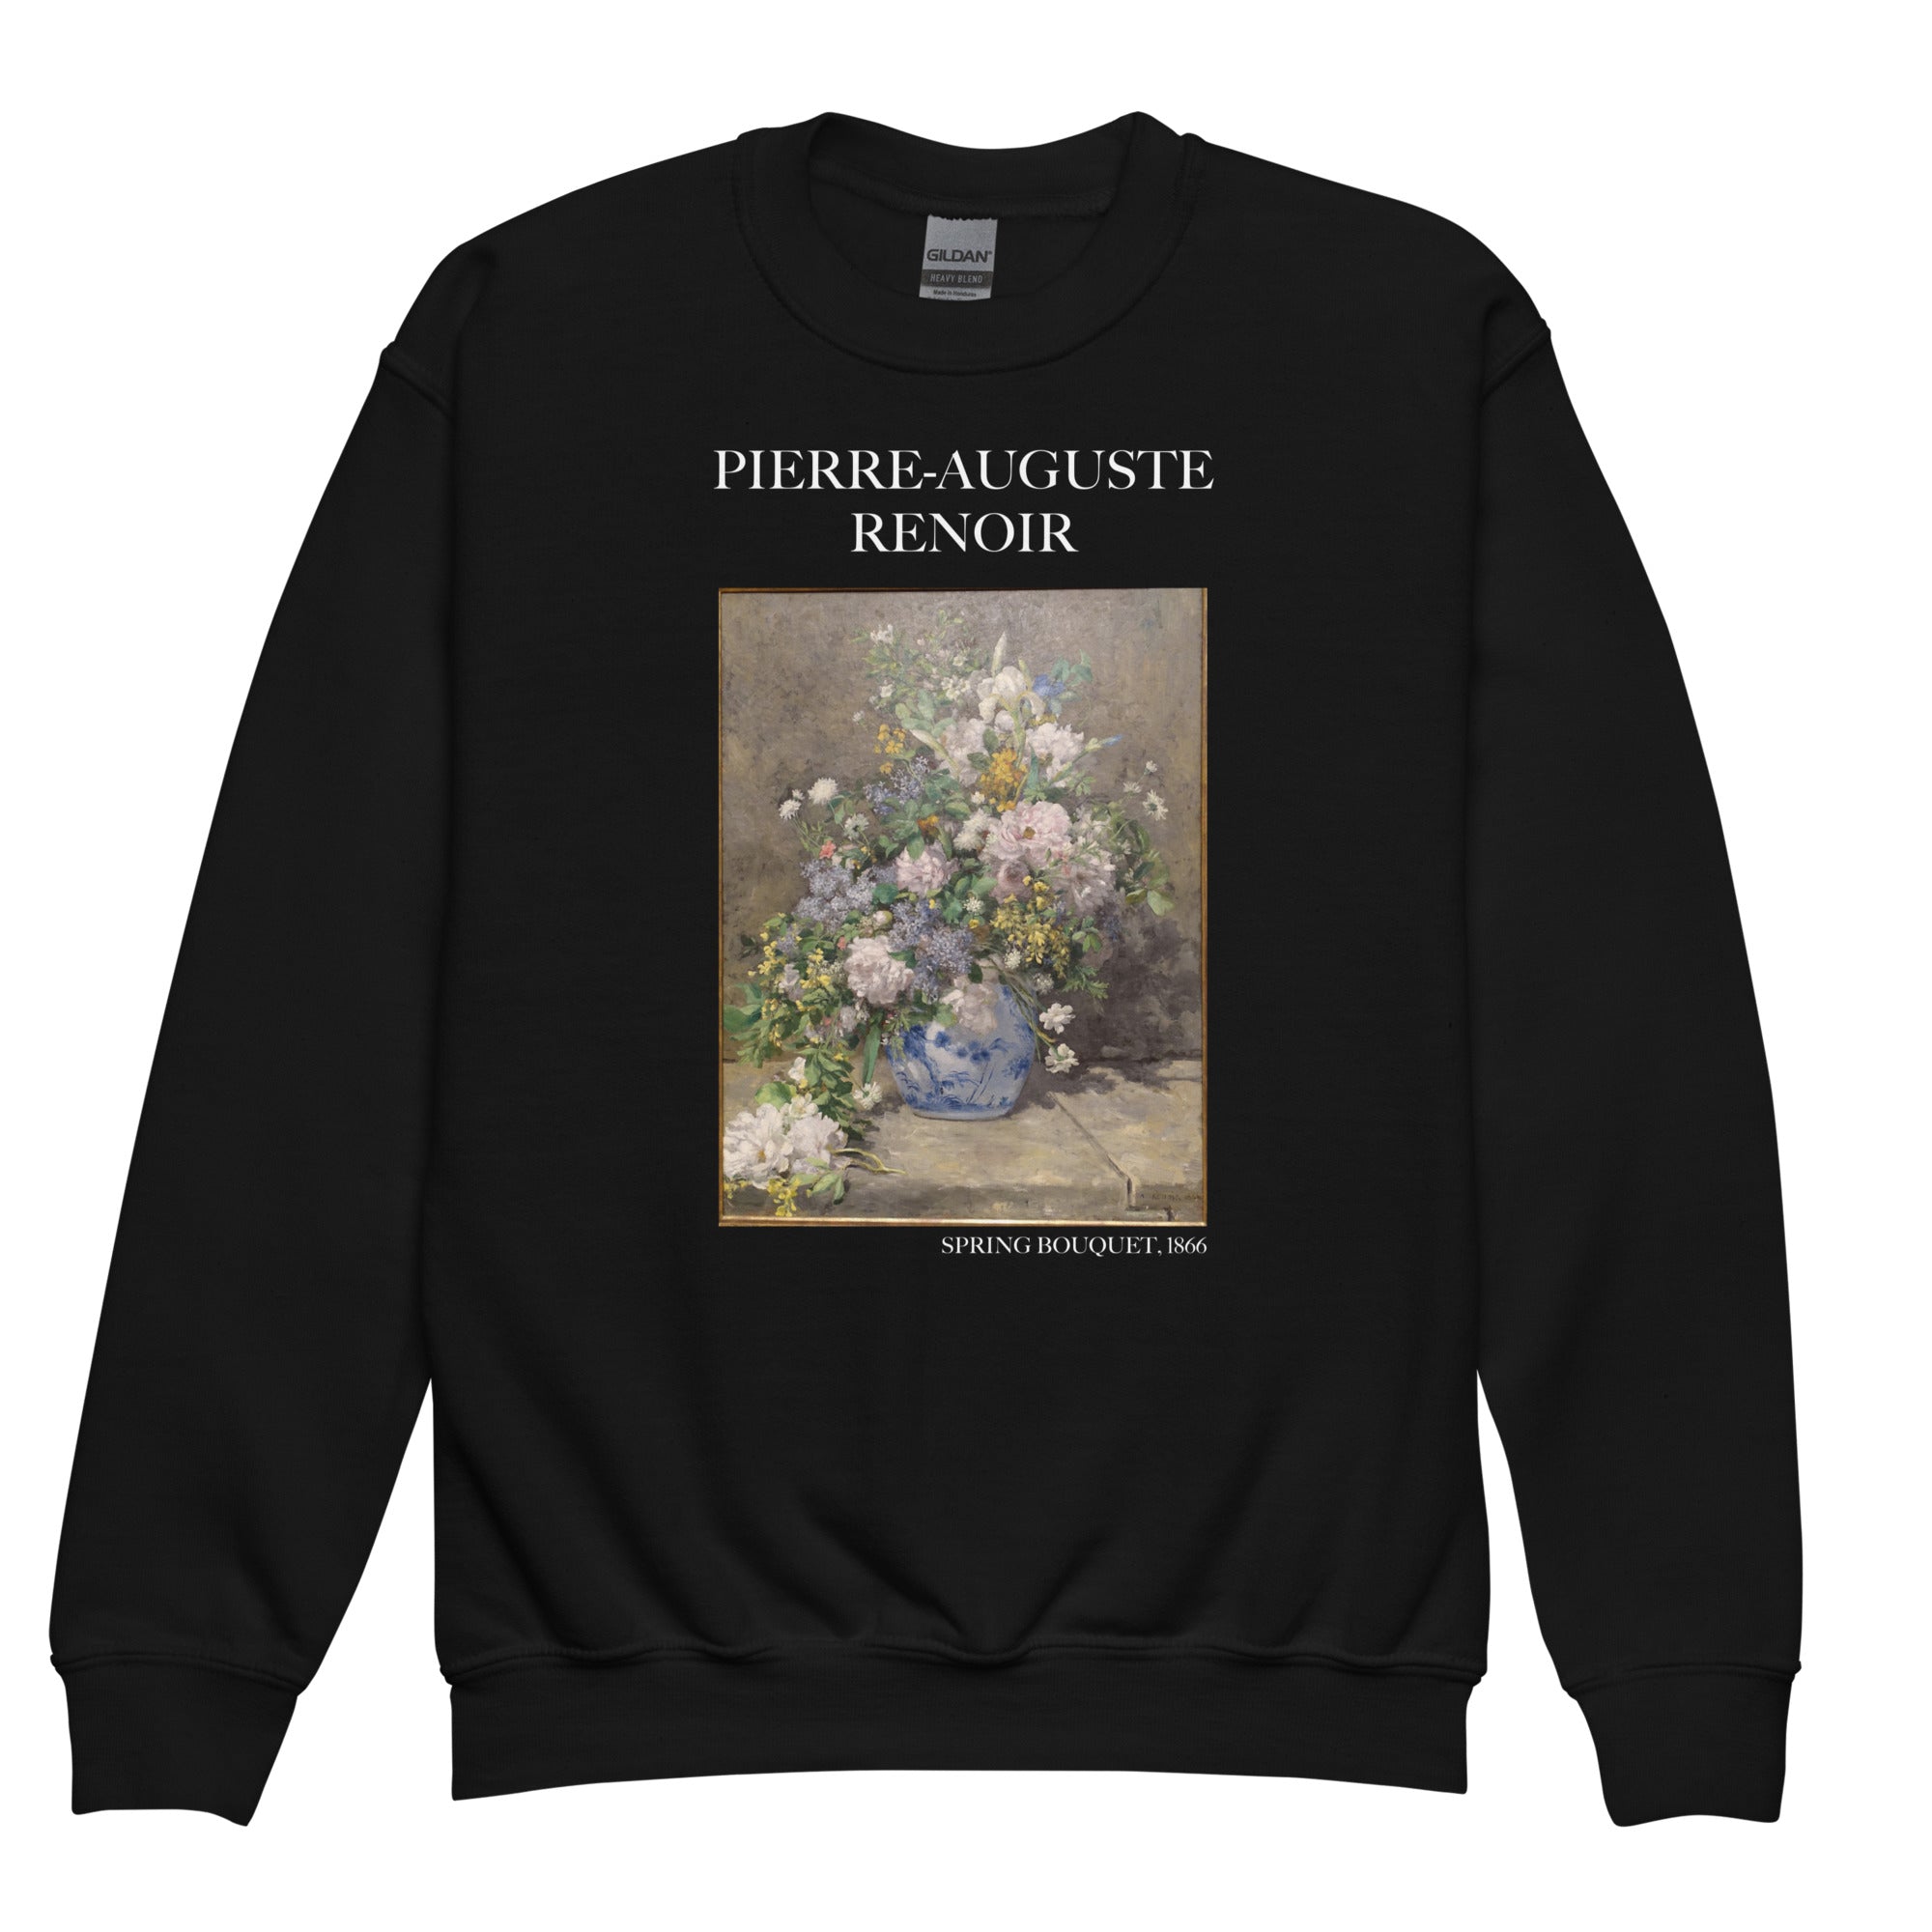 Pierre-Auguste Renoir 'Spring Bouquet' Famous Painting Crewneck Sweatshirt | Premium Youth Art Sweatshirt